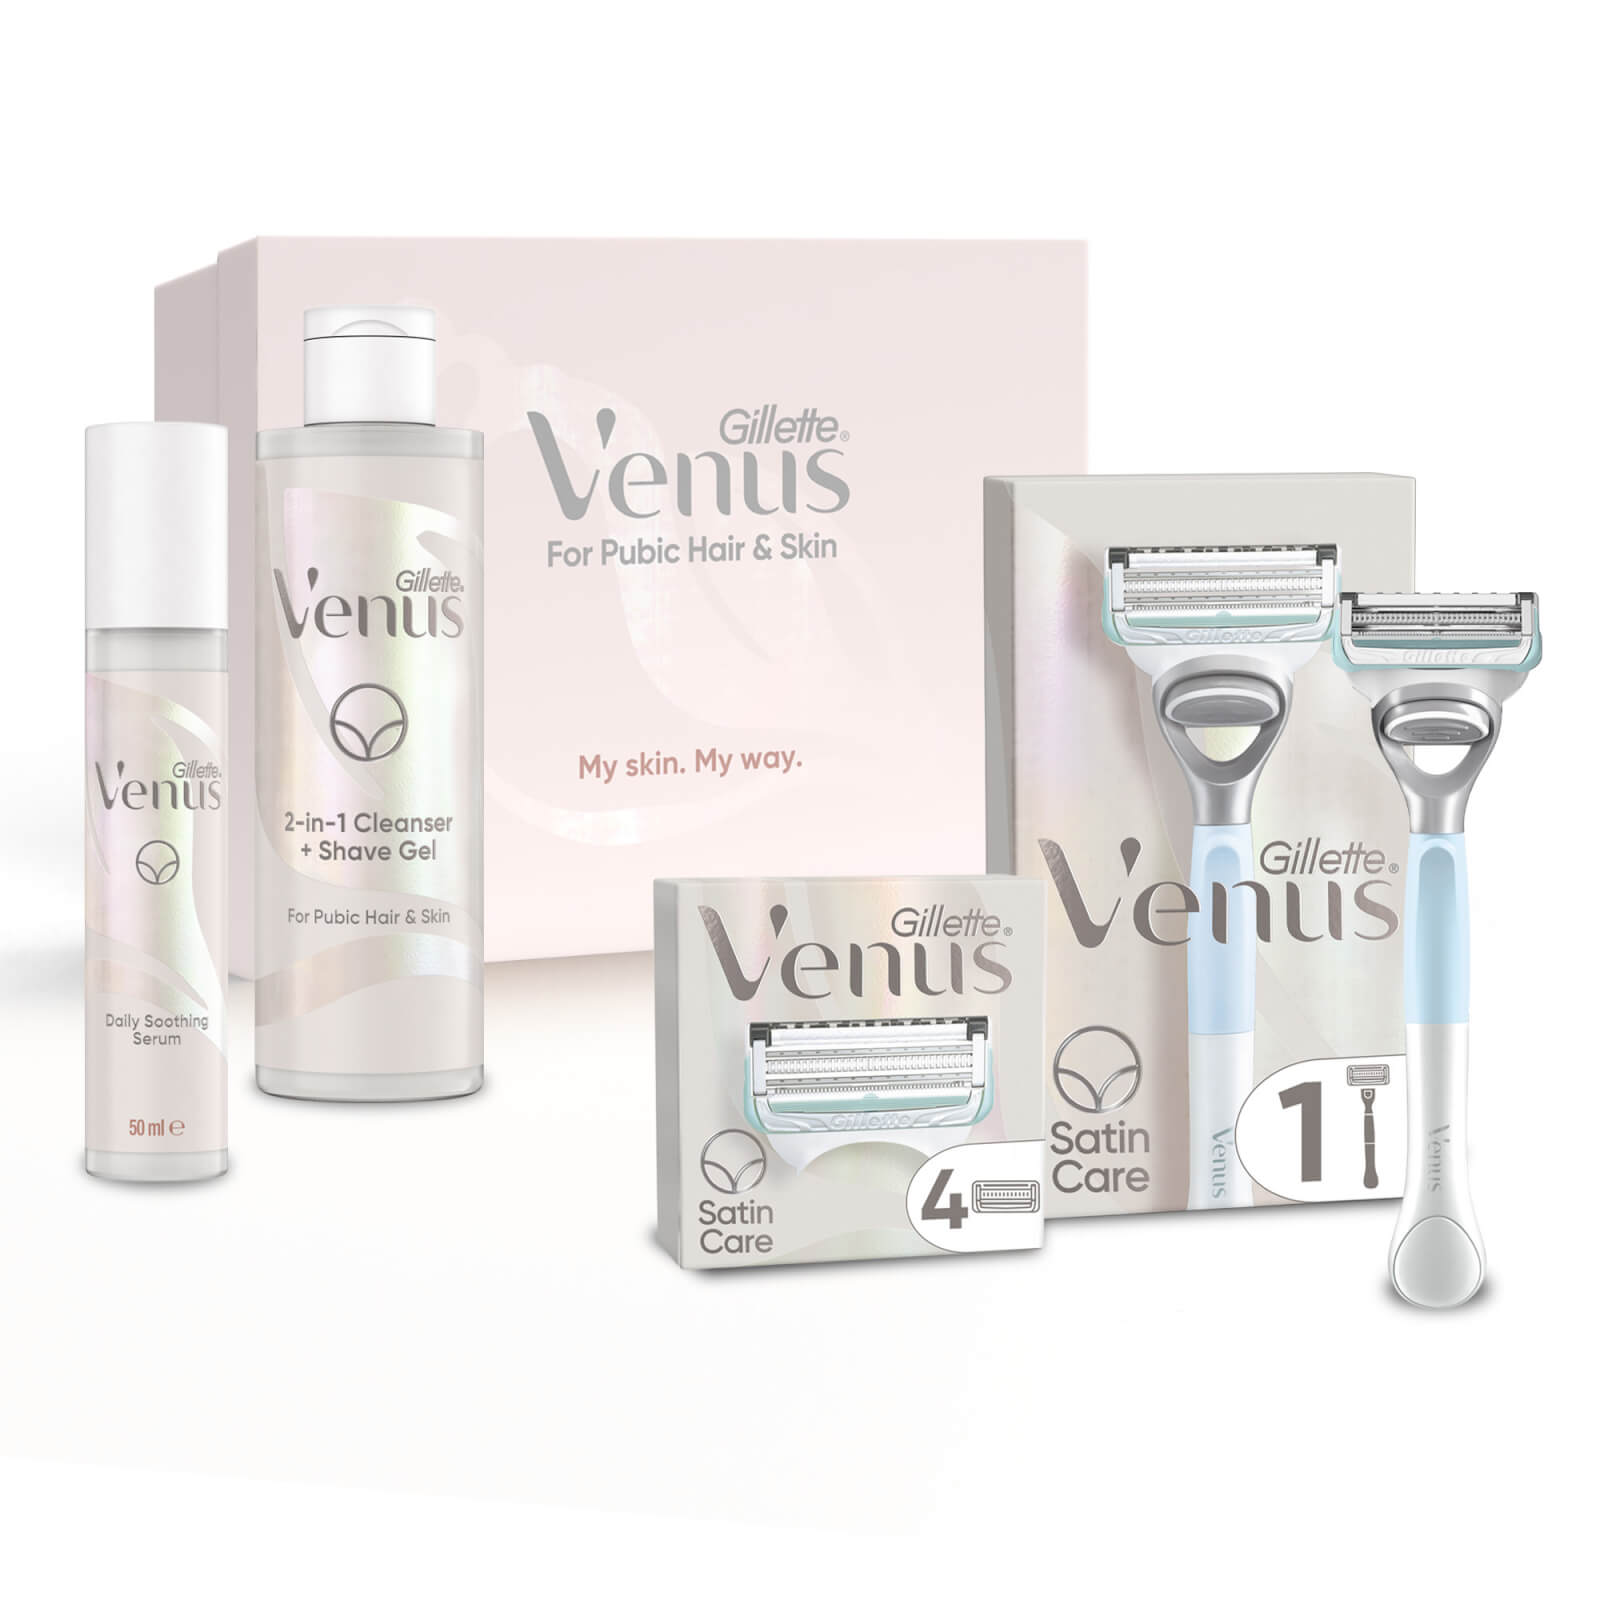 Venus Pubic Hair and Skin Comfort Giftset